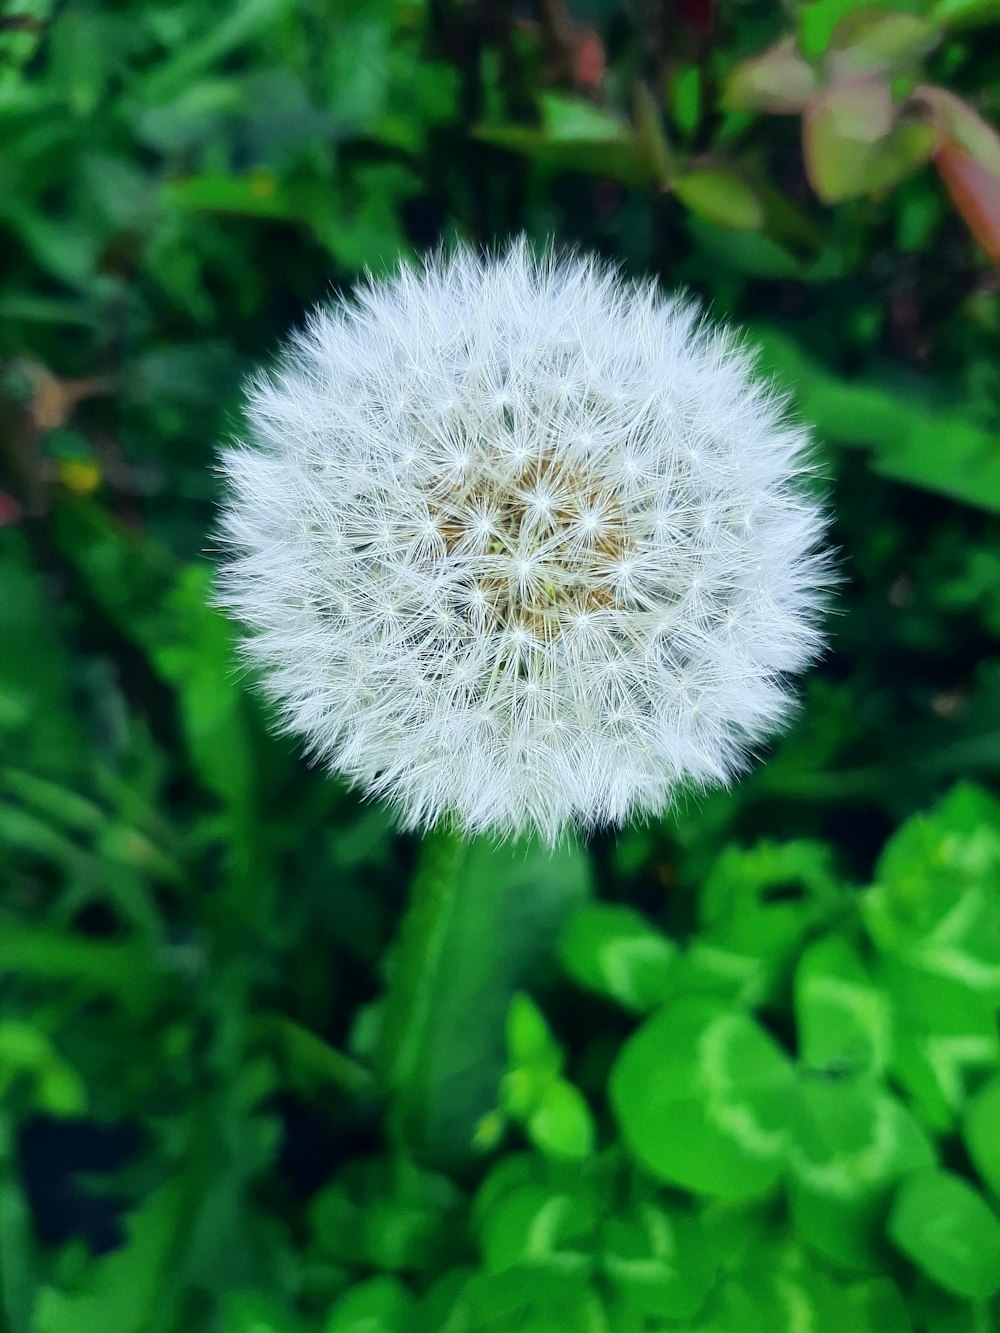 a white dandelion flower